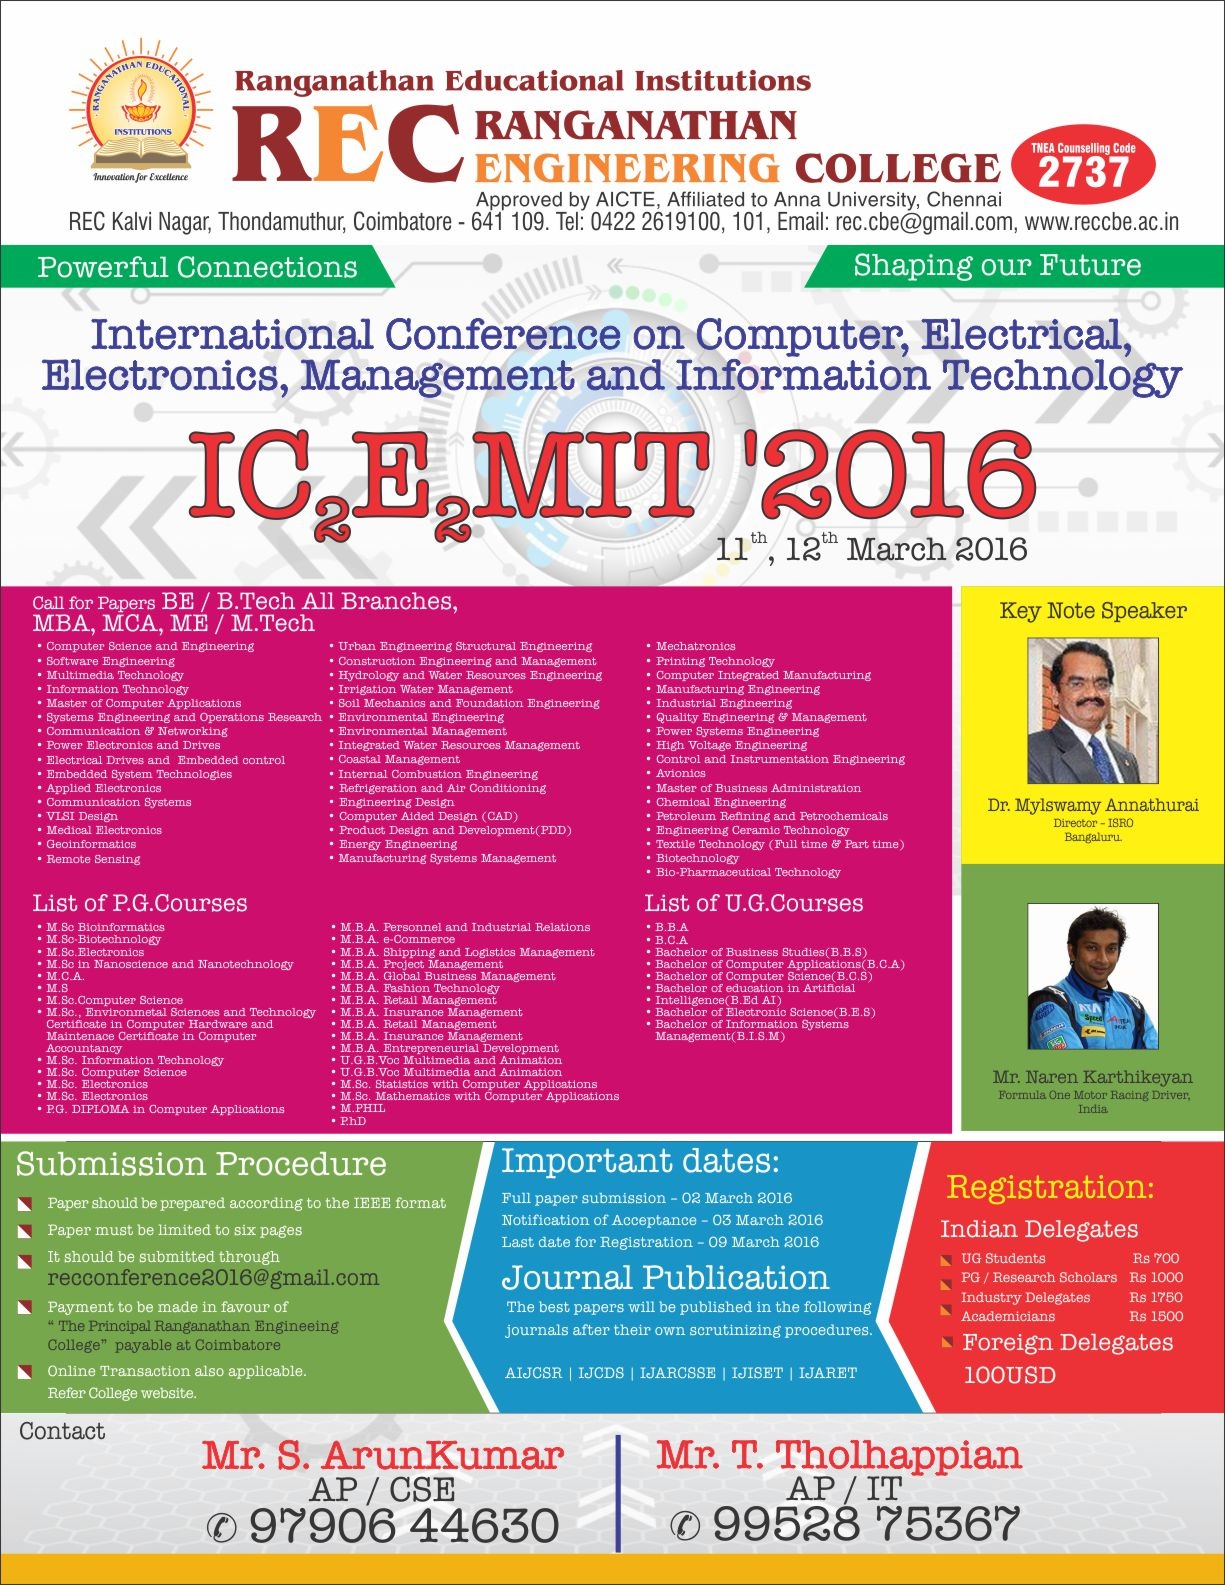 IC2E2MIT'2016, Coimbatore, Tamil Nadu, India